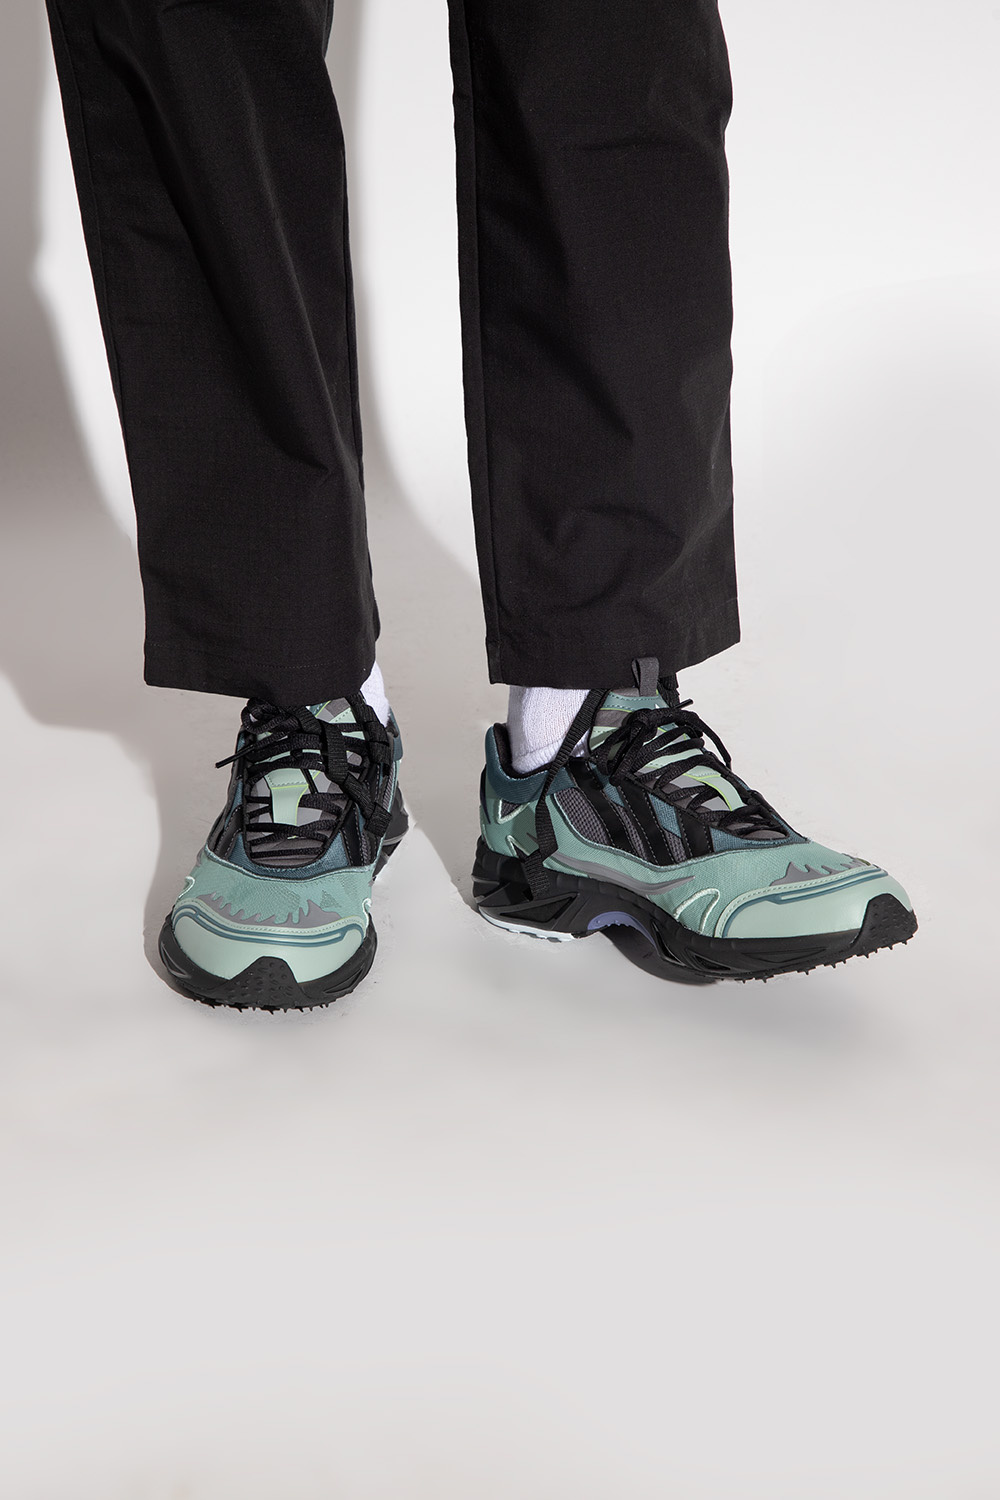 ADIDAS Originals ‘Xare Boost’ sneakers | Men's Shoes | Vitkac